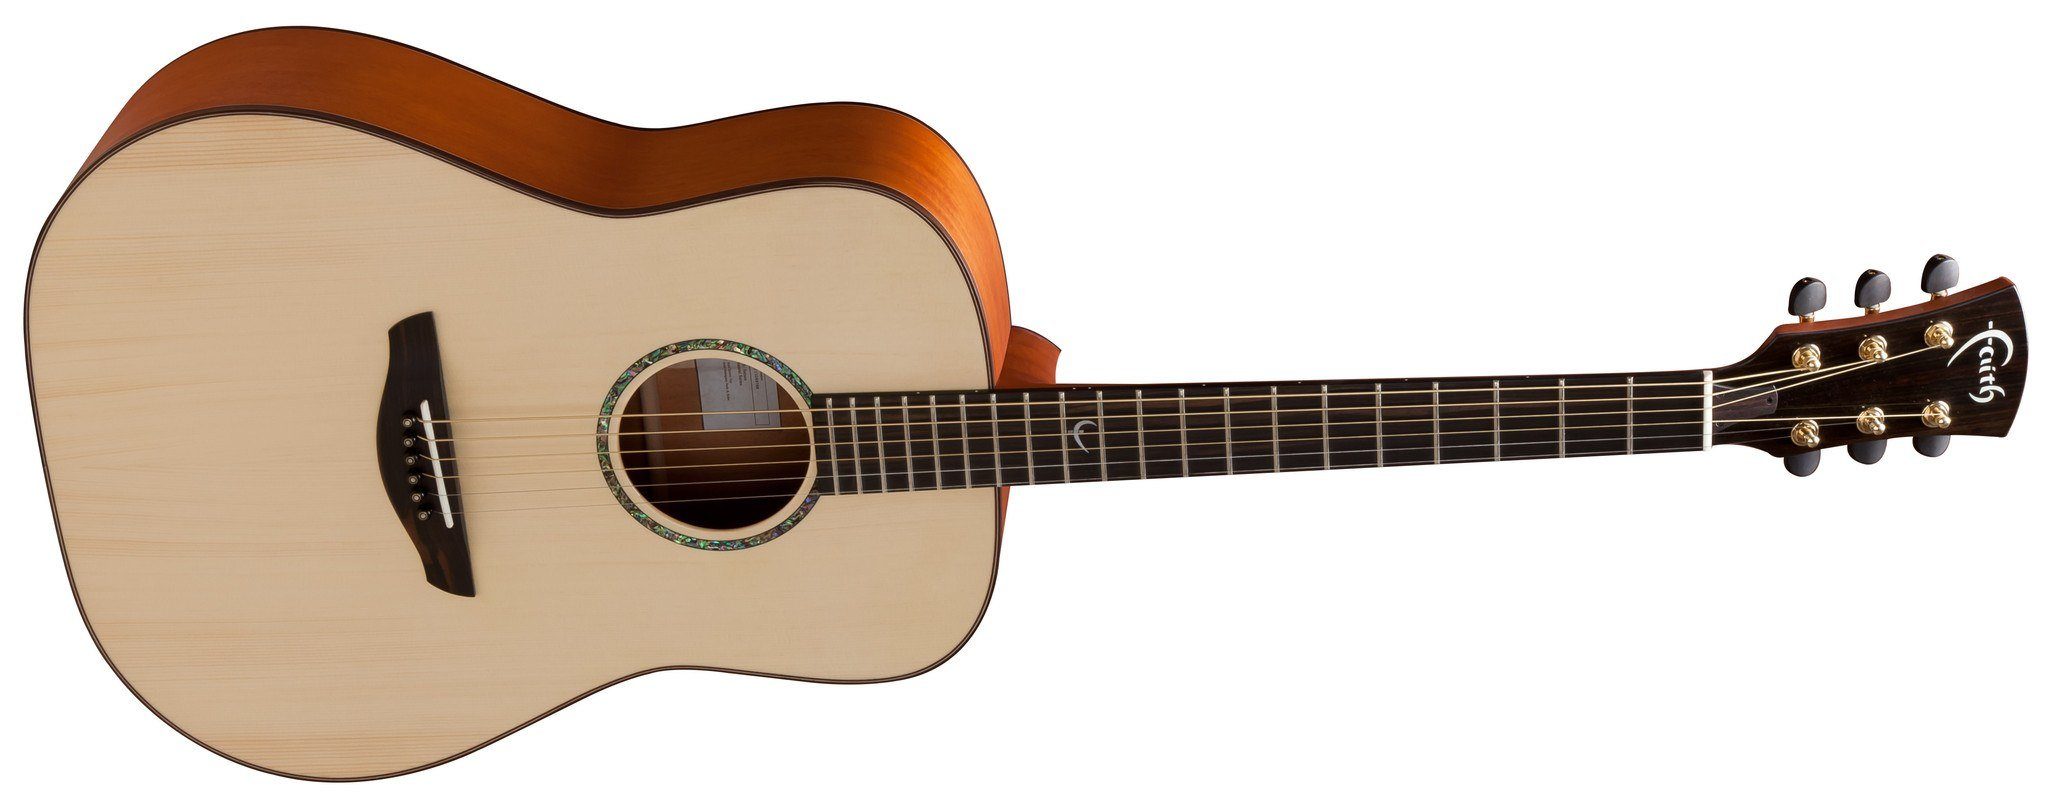 Faith FS Acoustic Guitar (Saturn Dreadnought Natural), Acoustic Guitar for sale at Richards Guitars.